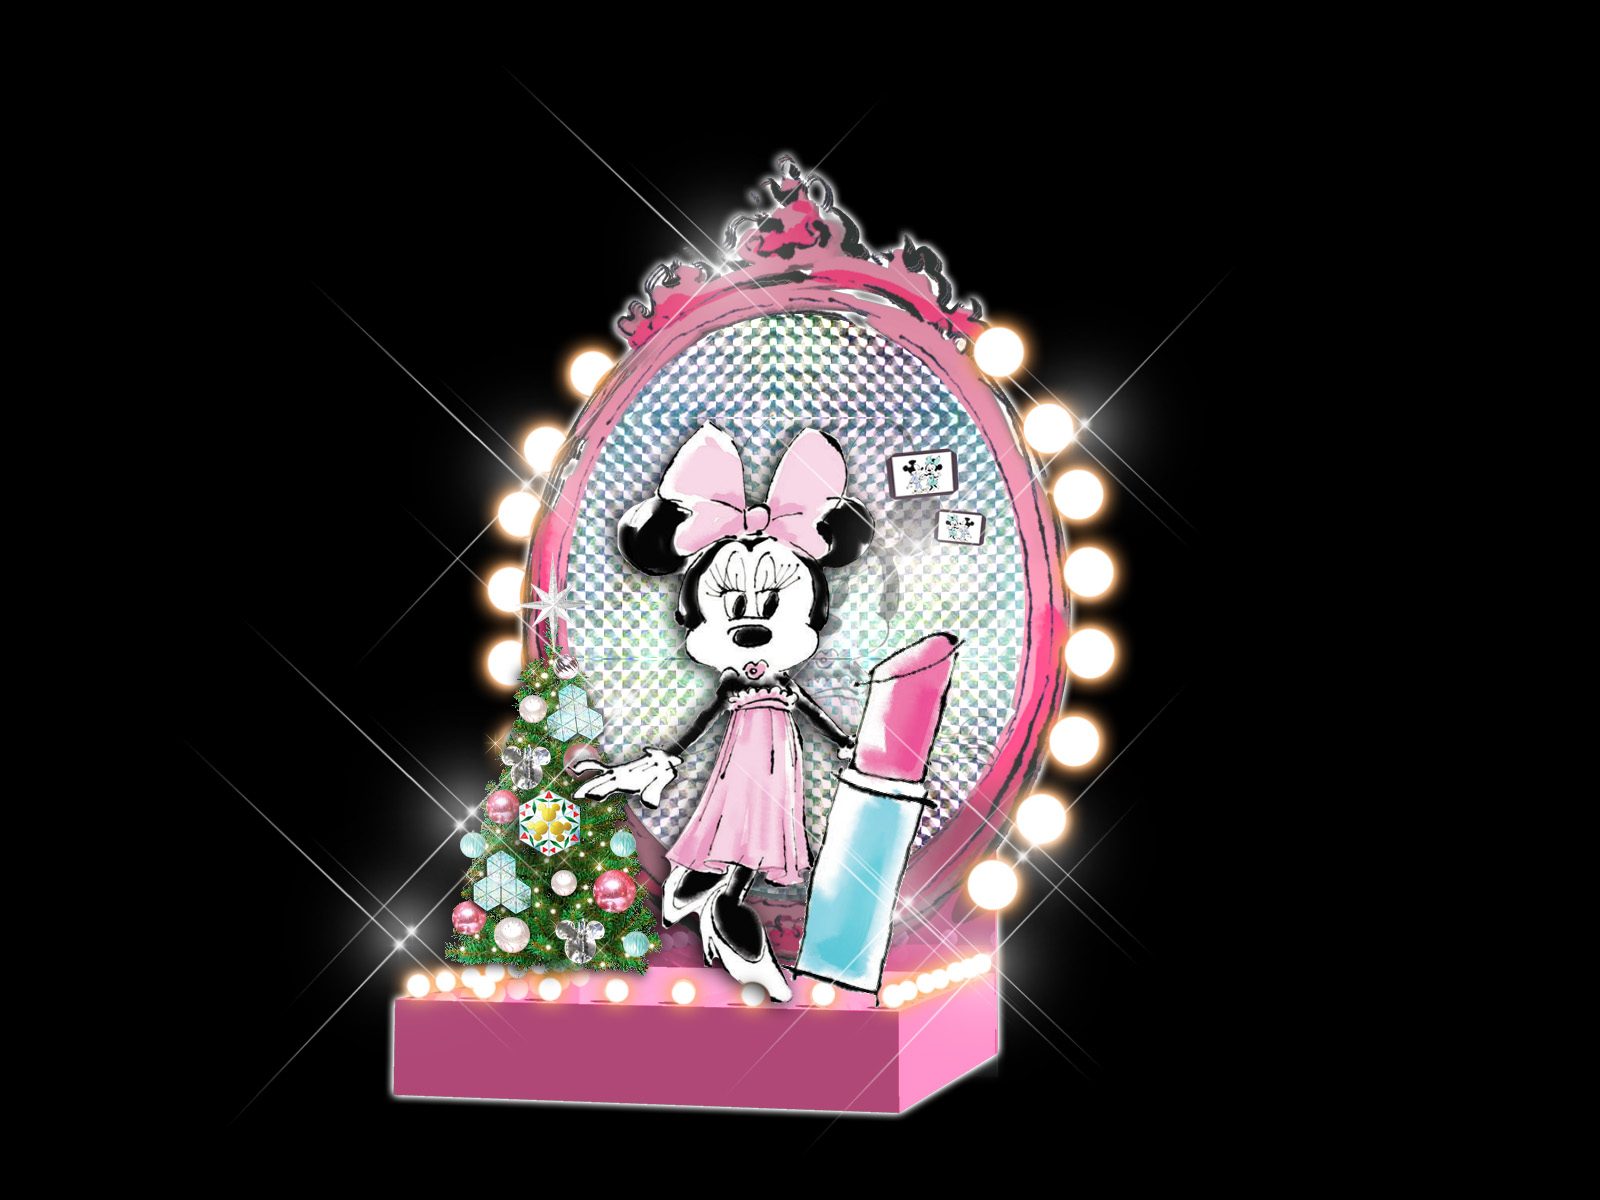 【Shibuya Hikarie Christmas 2017】「渋谷ヒカリエ」に世界中から愛されている「ミニーマウス」が登場